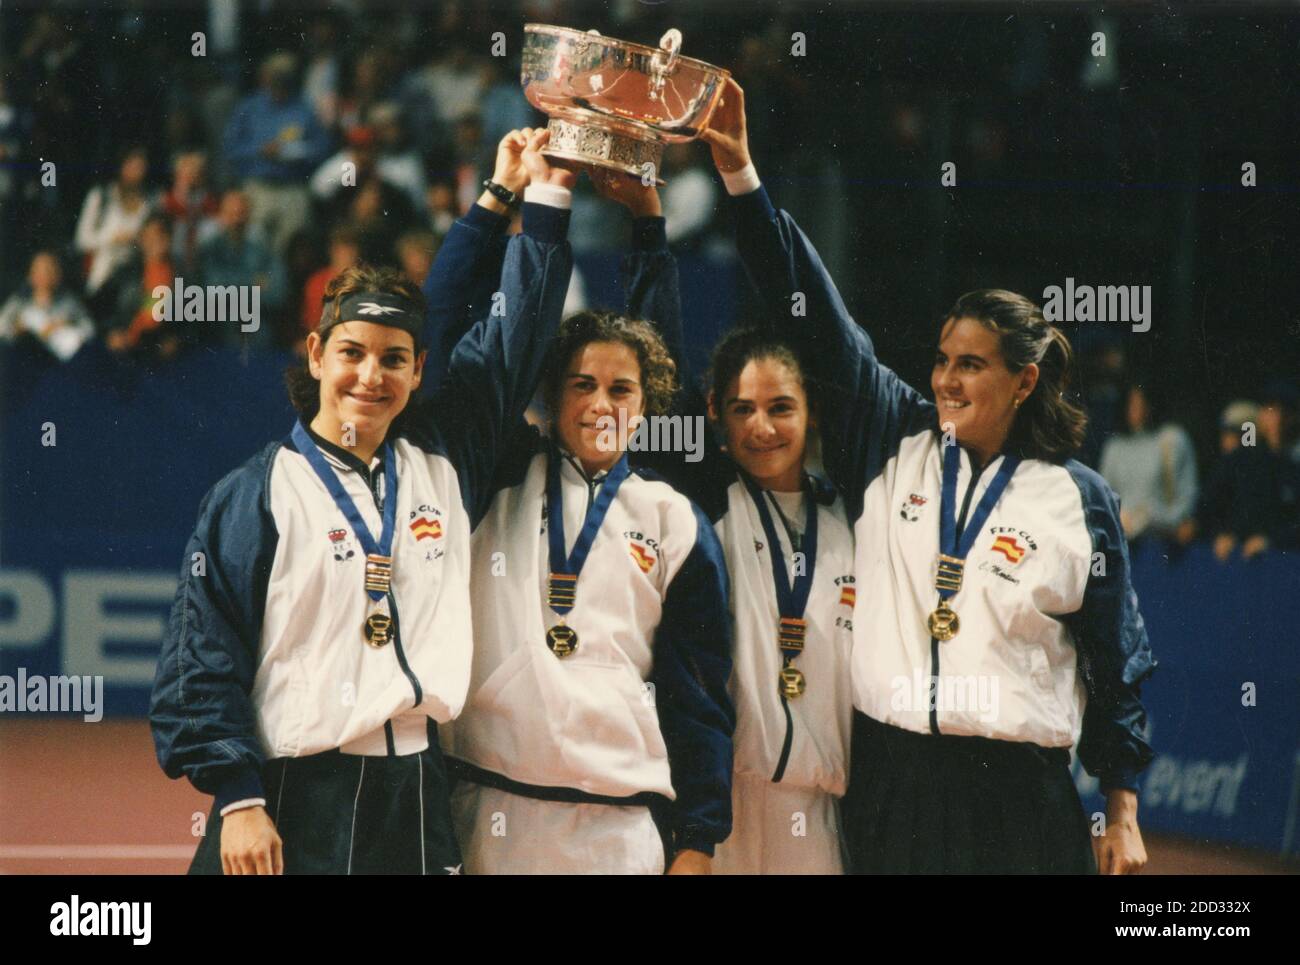 Spanish tennis players Arantxa Sanchez Vicario, Magui Serna, Virginia Ruano-Pascual, and Conchita Martinez, Federations Cup trophy, Geneva 1998 Stock Photo